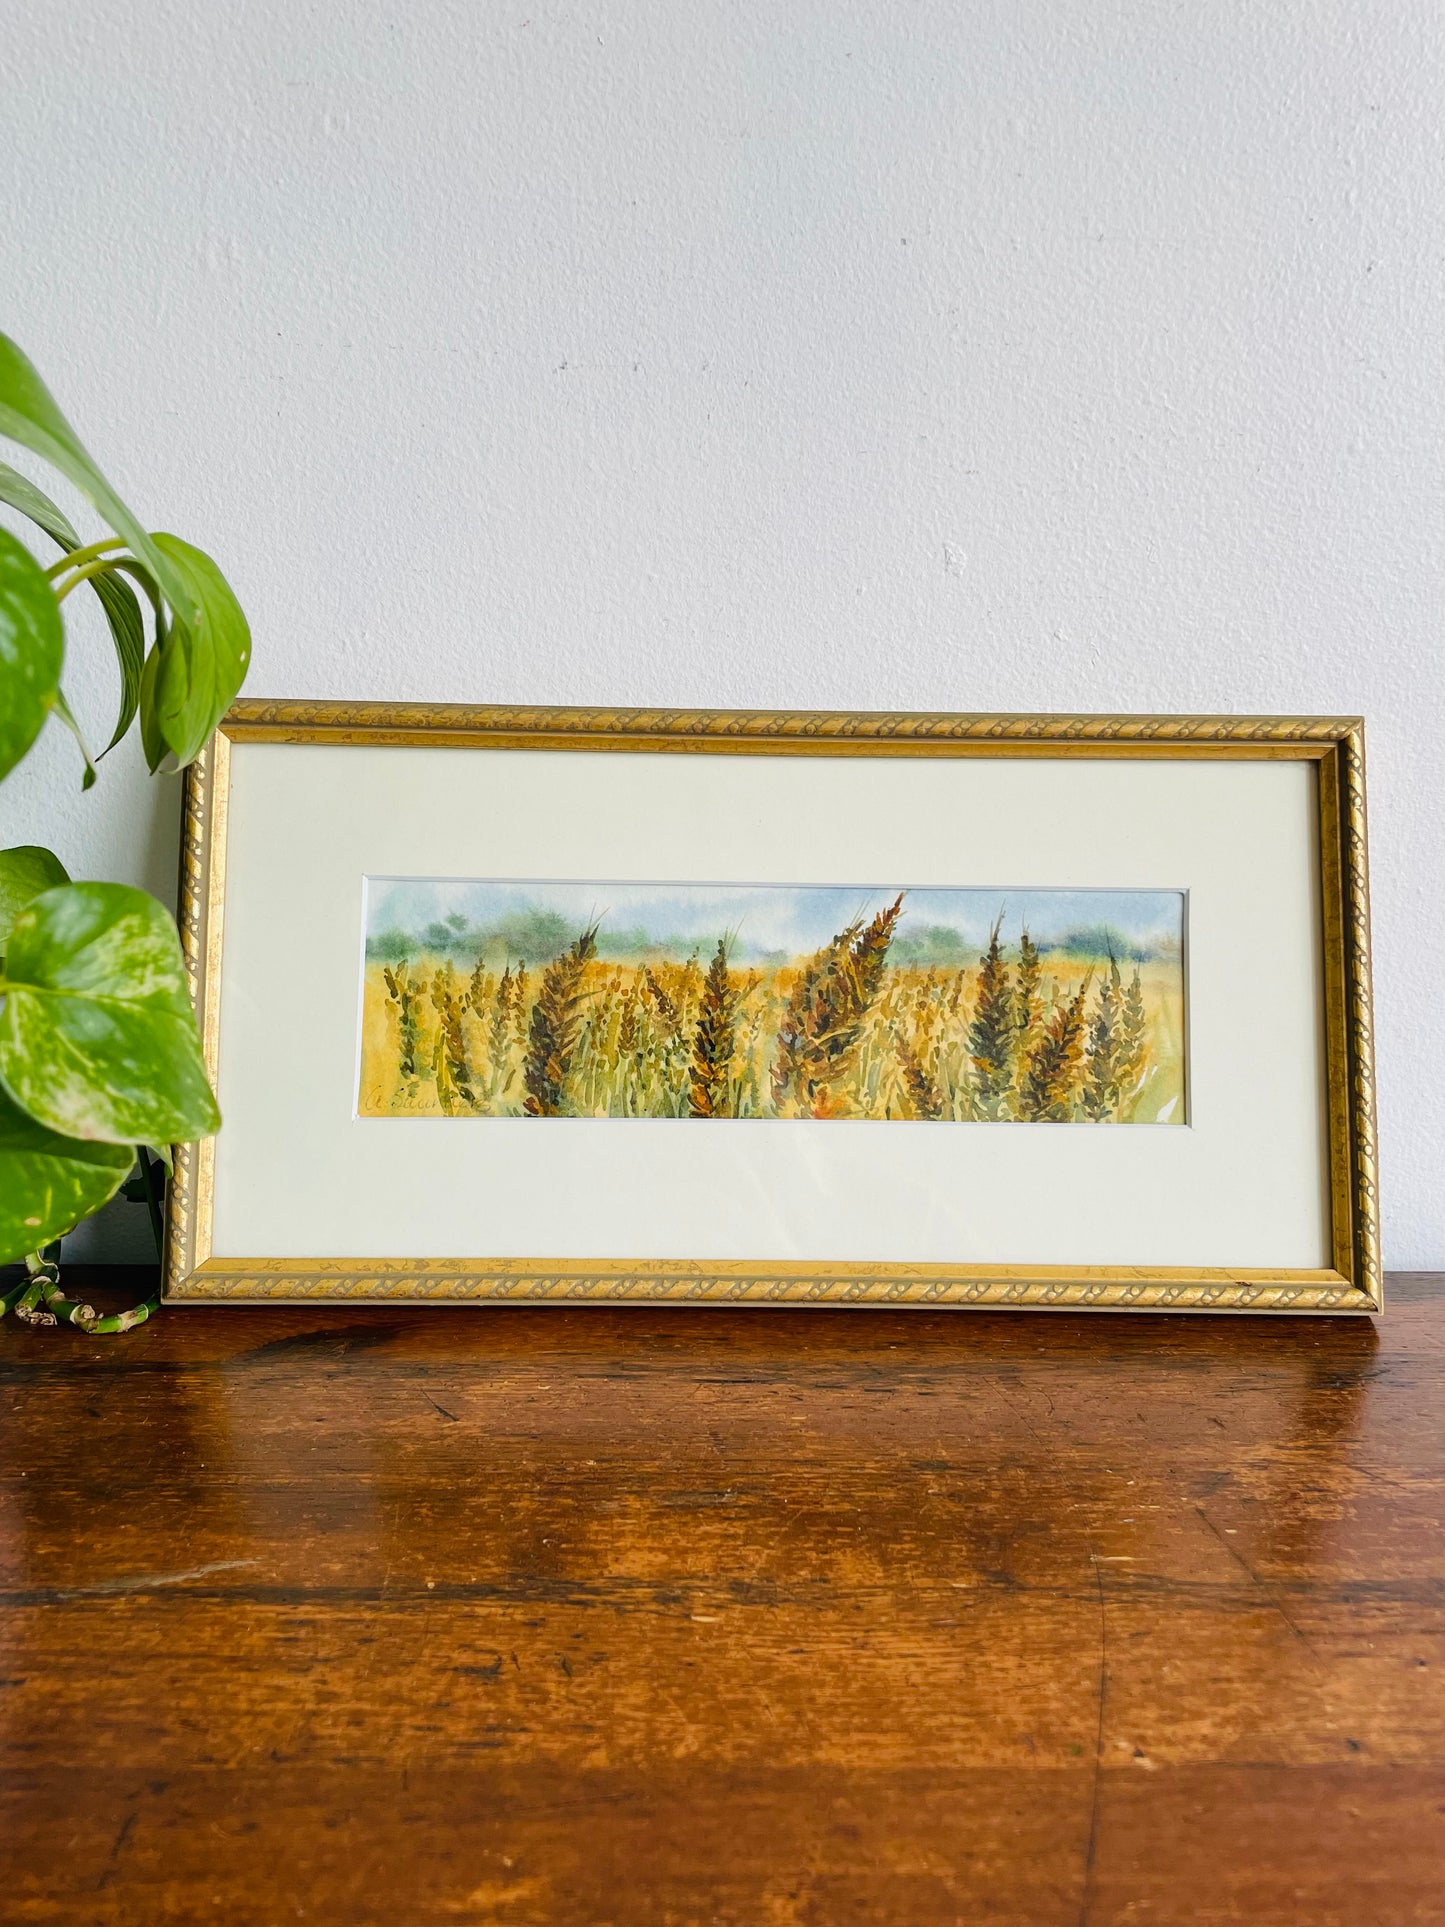 Original Art - Golden Wheat Field Watercolour Painting - Signed by Arlene Saunders of Oakville, Ontario